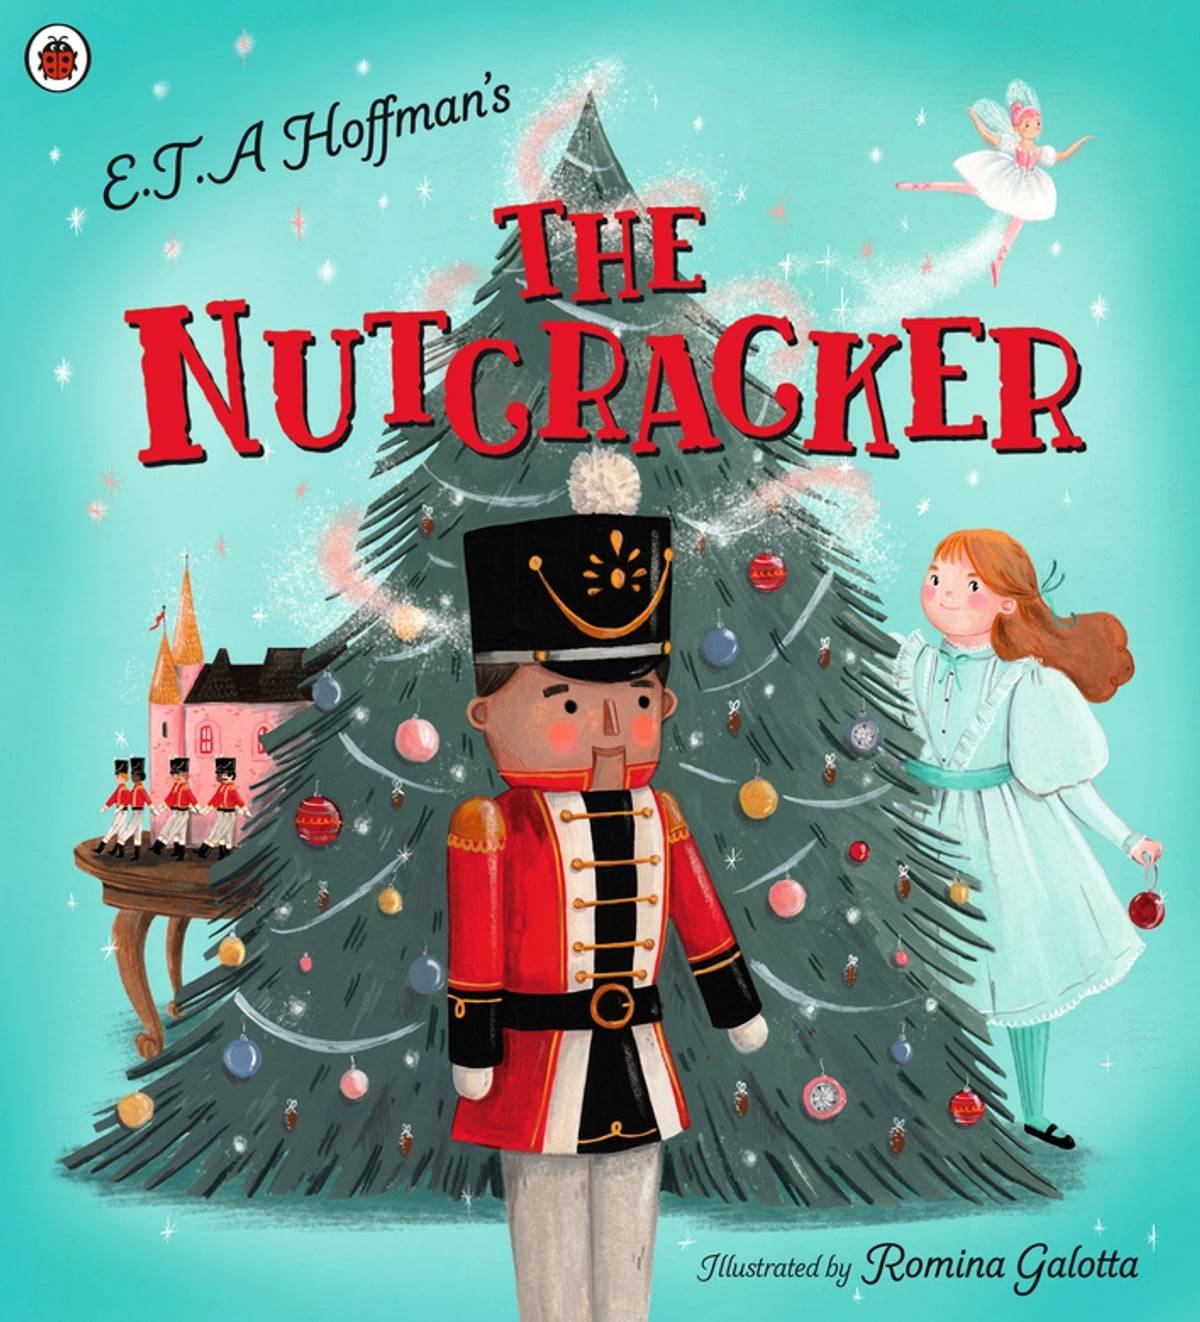 IMG : The Nutcracker